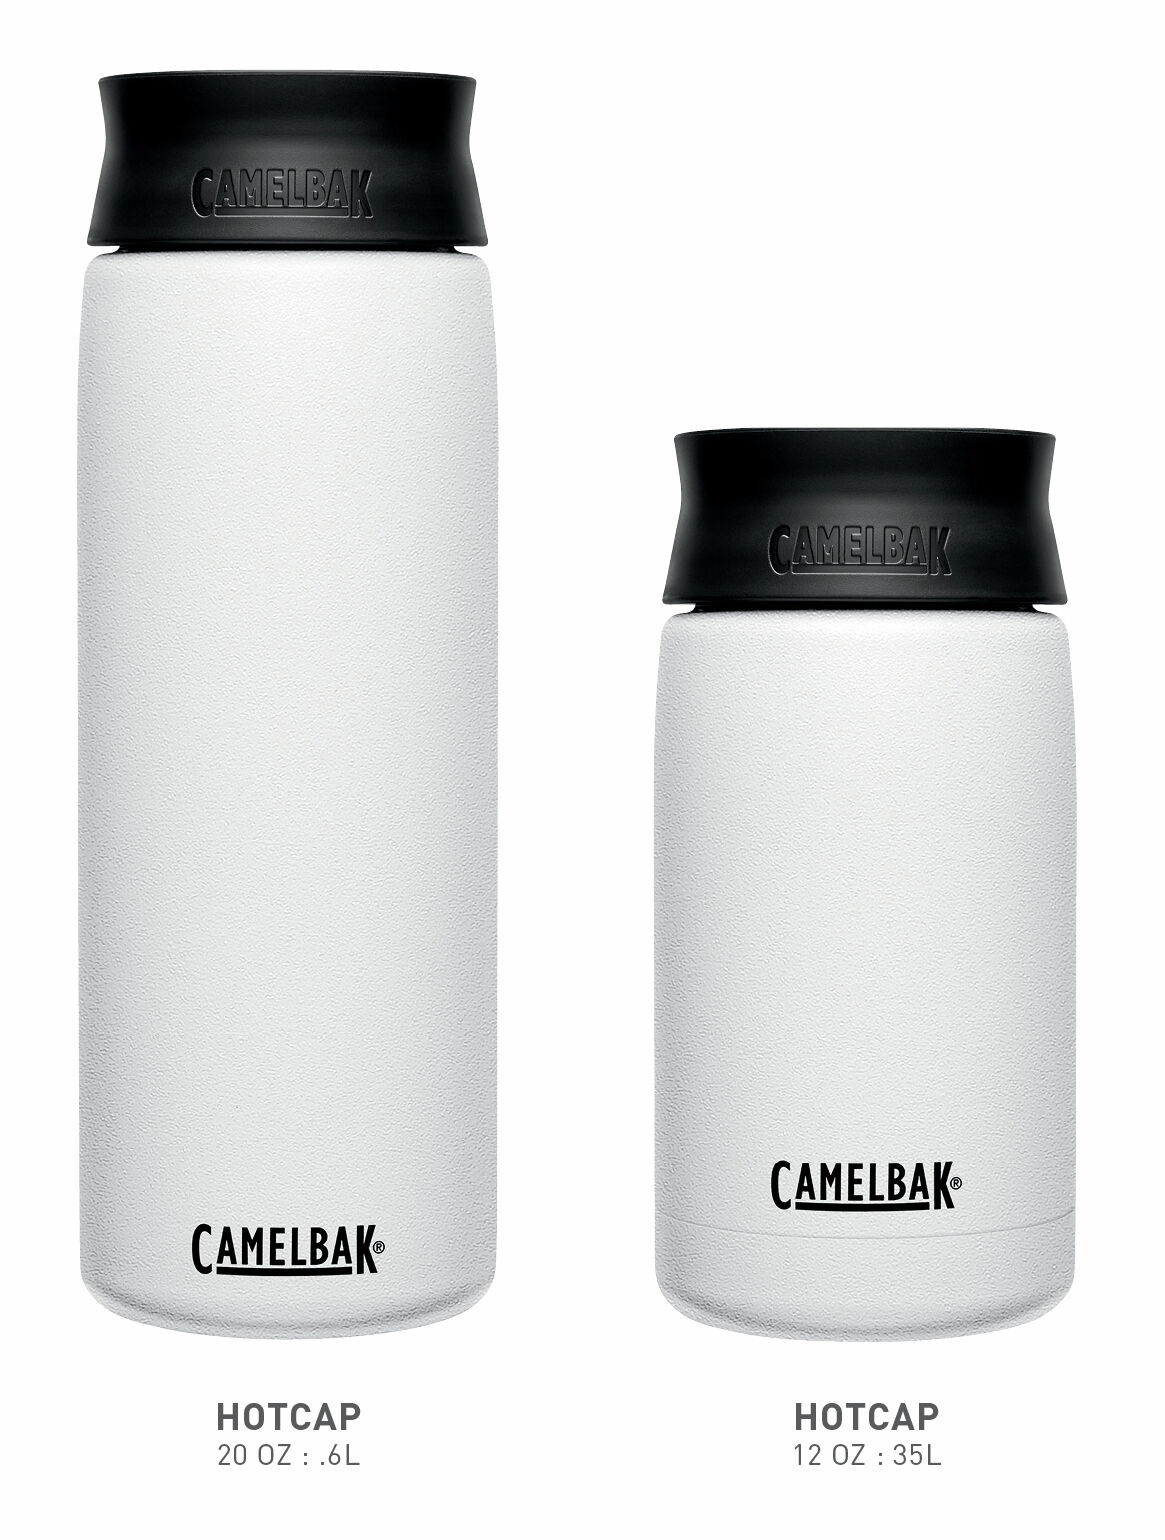 Camelbak Hot Cap Vacuum Insulated Stainless Steel Mug 